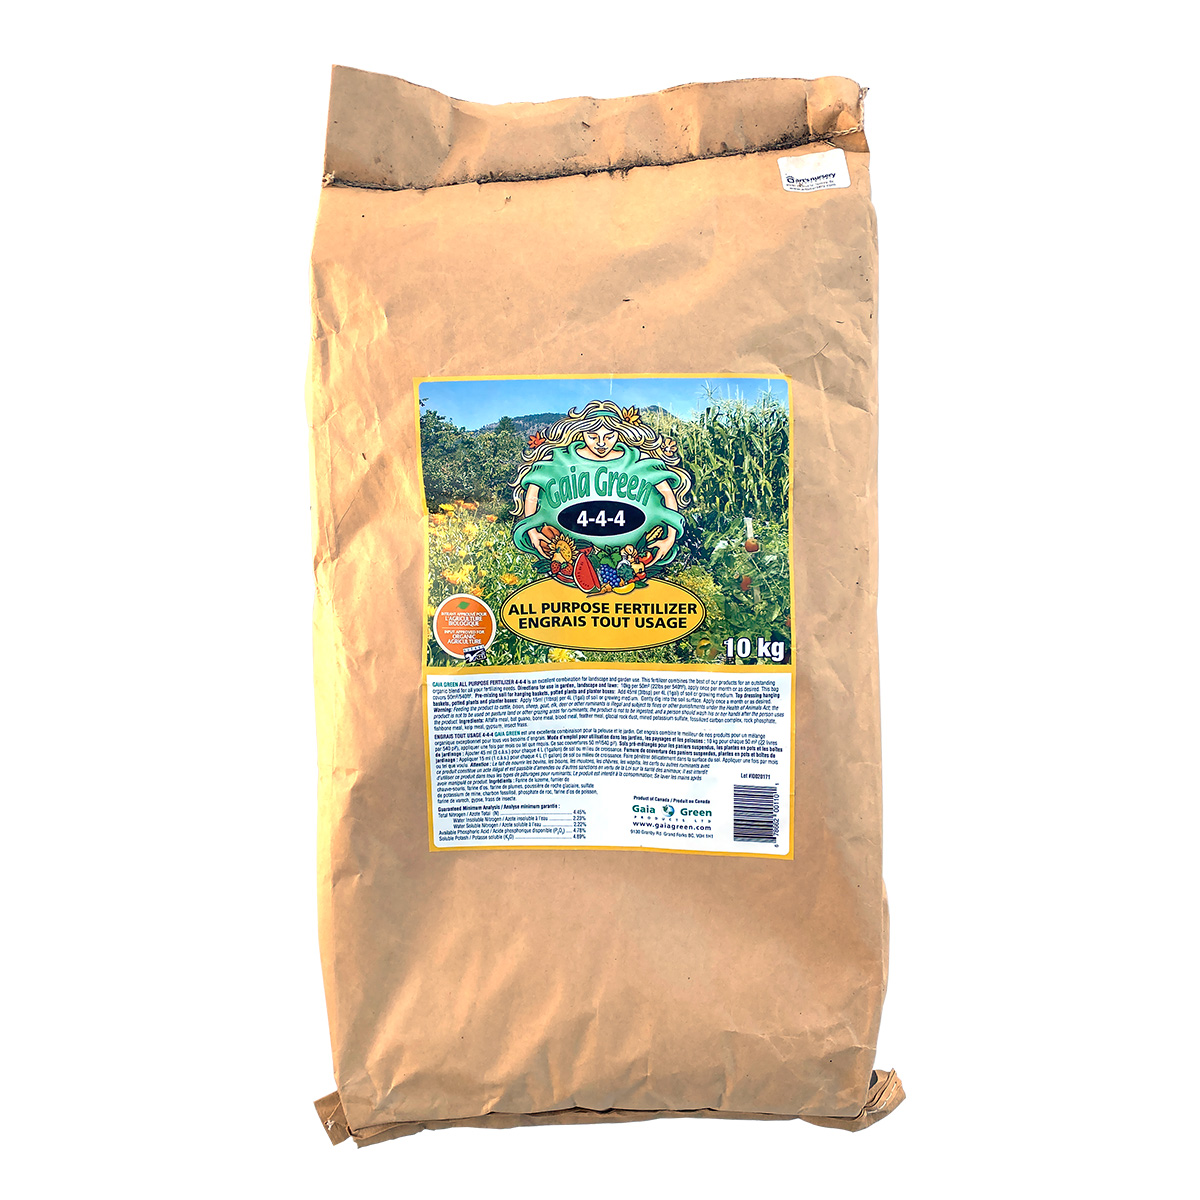 Dogwood Brand All Purpose Fertilizer 6-8-6